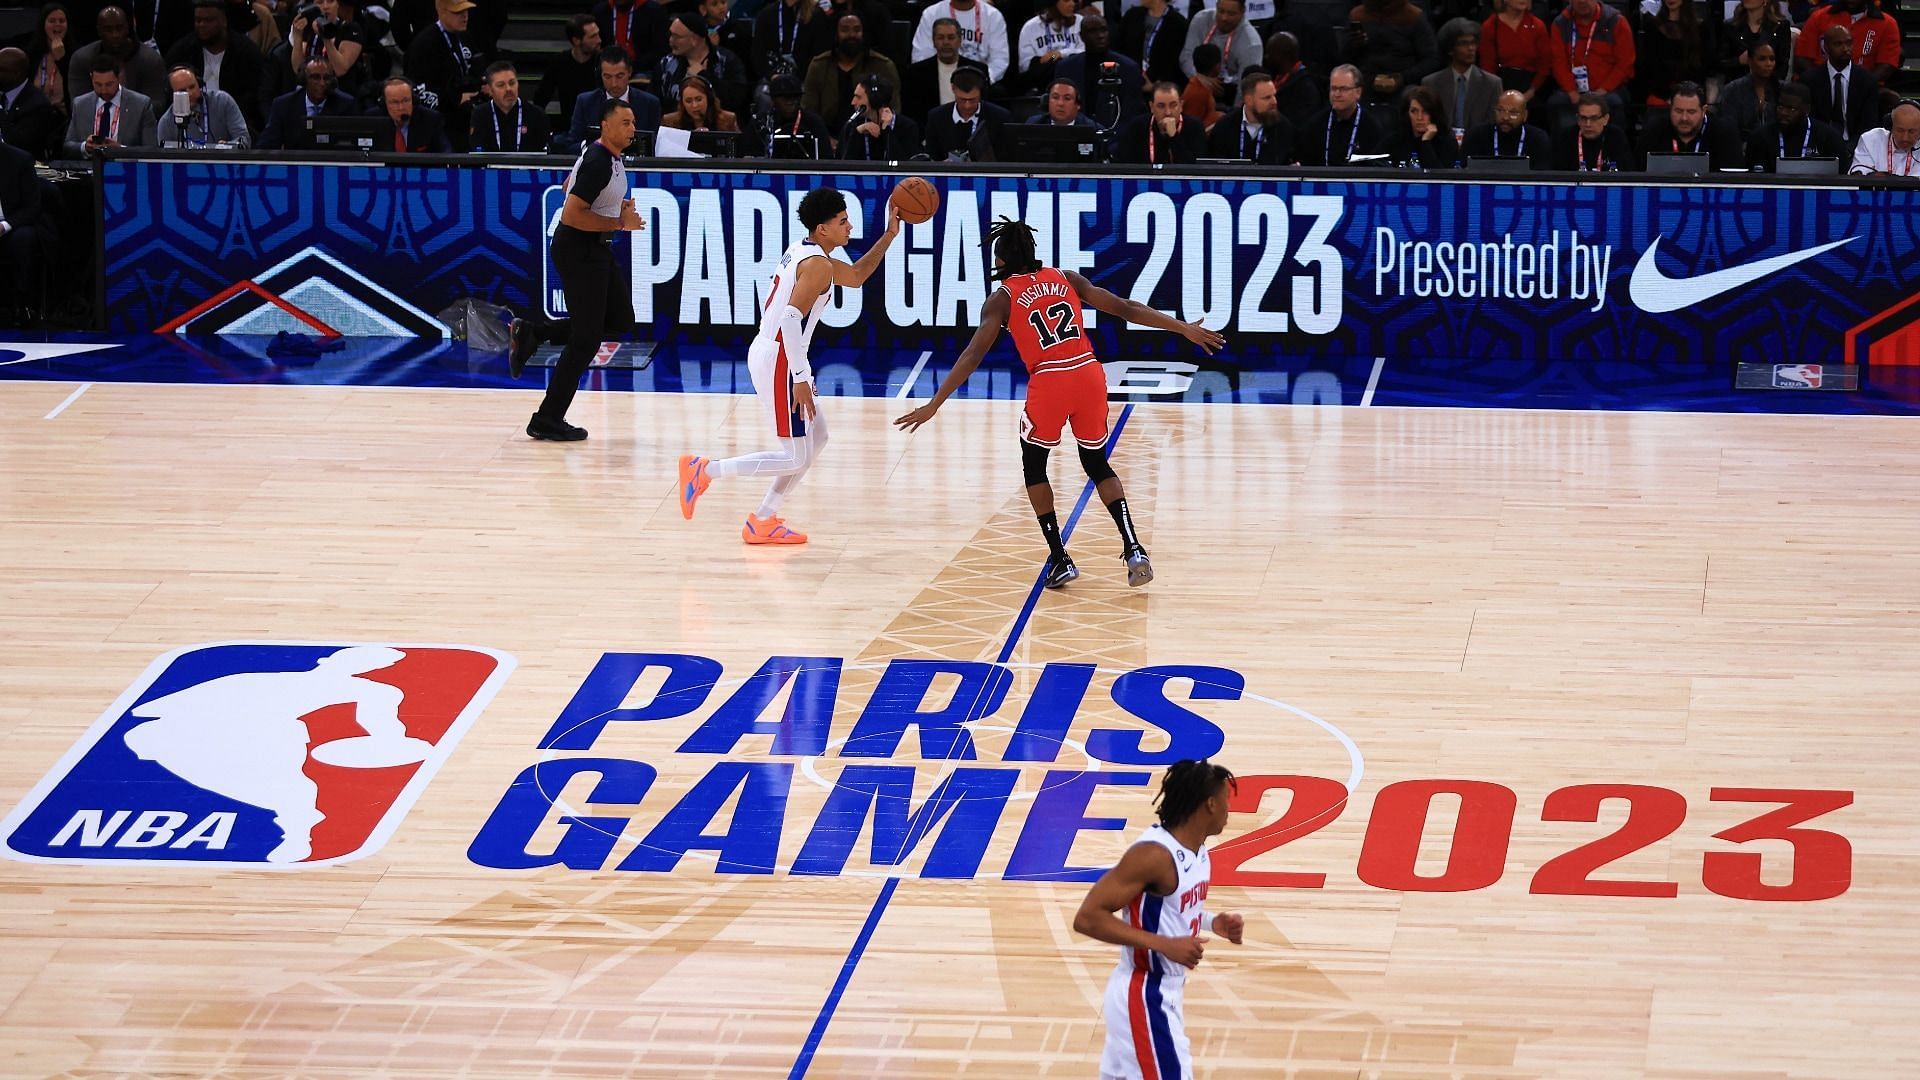 NBA Paris Game 2023